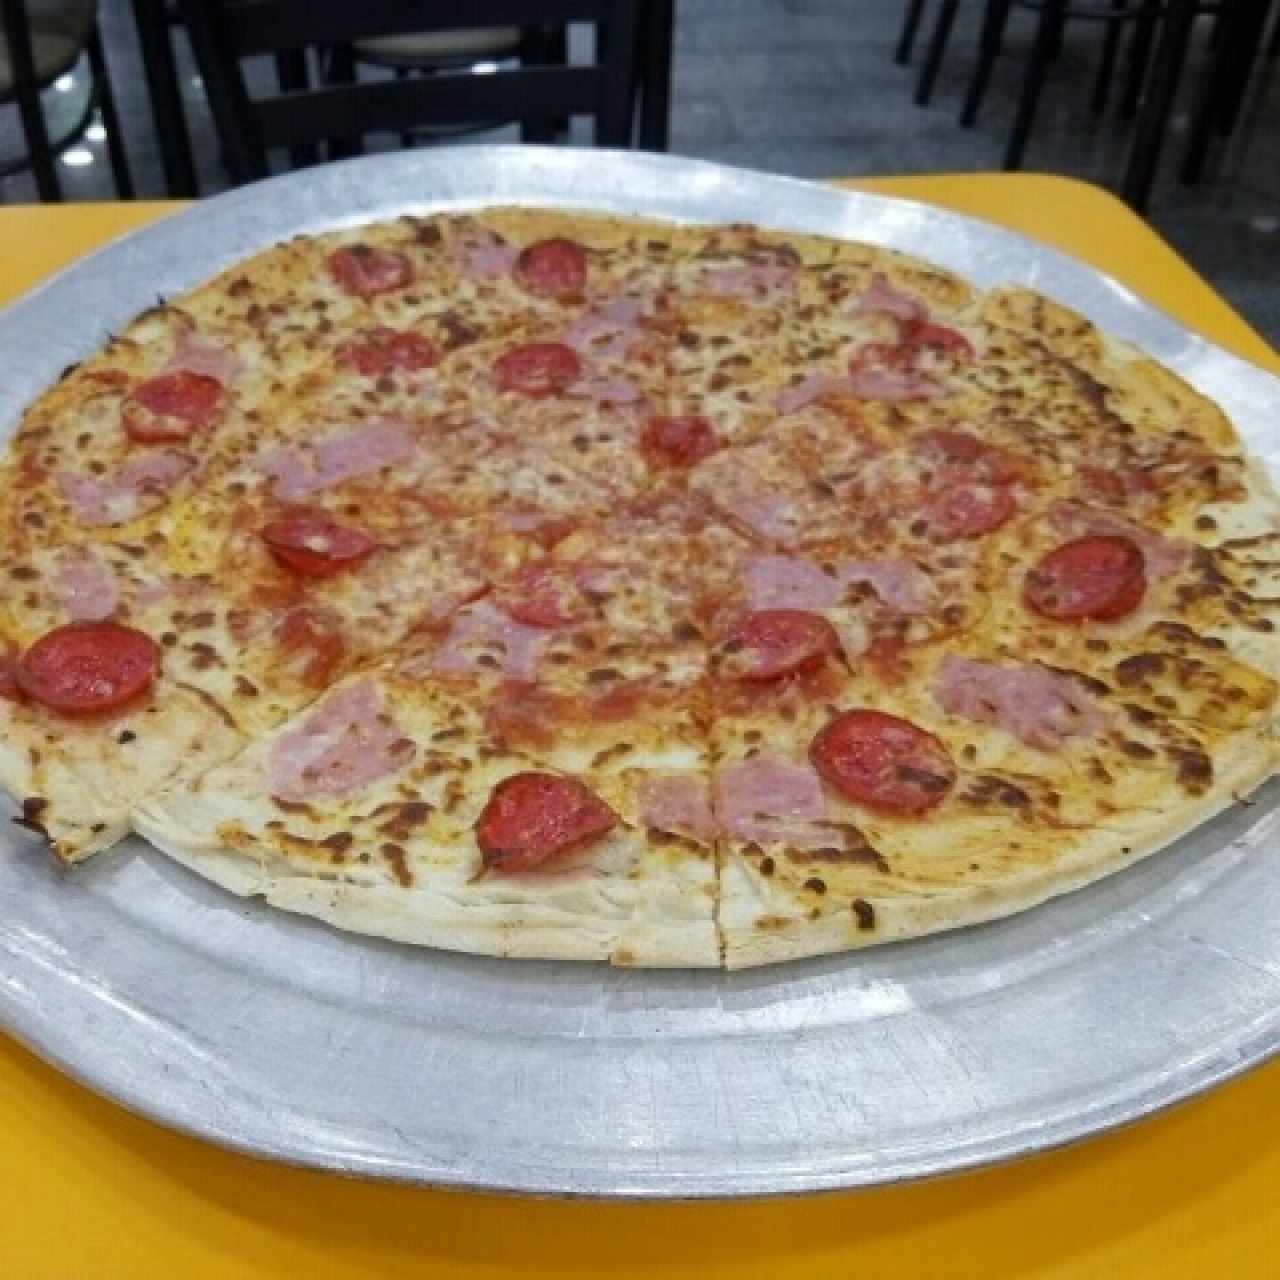 Pizza mundial, ya no tan mundial